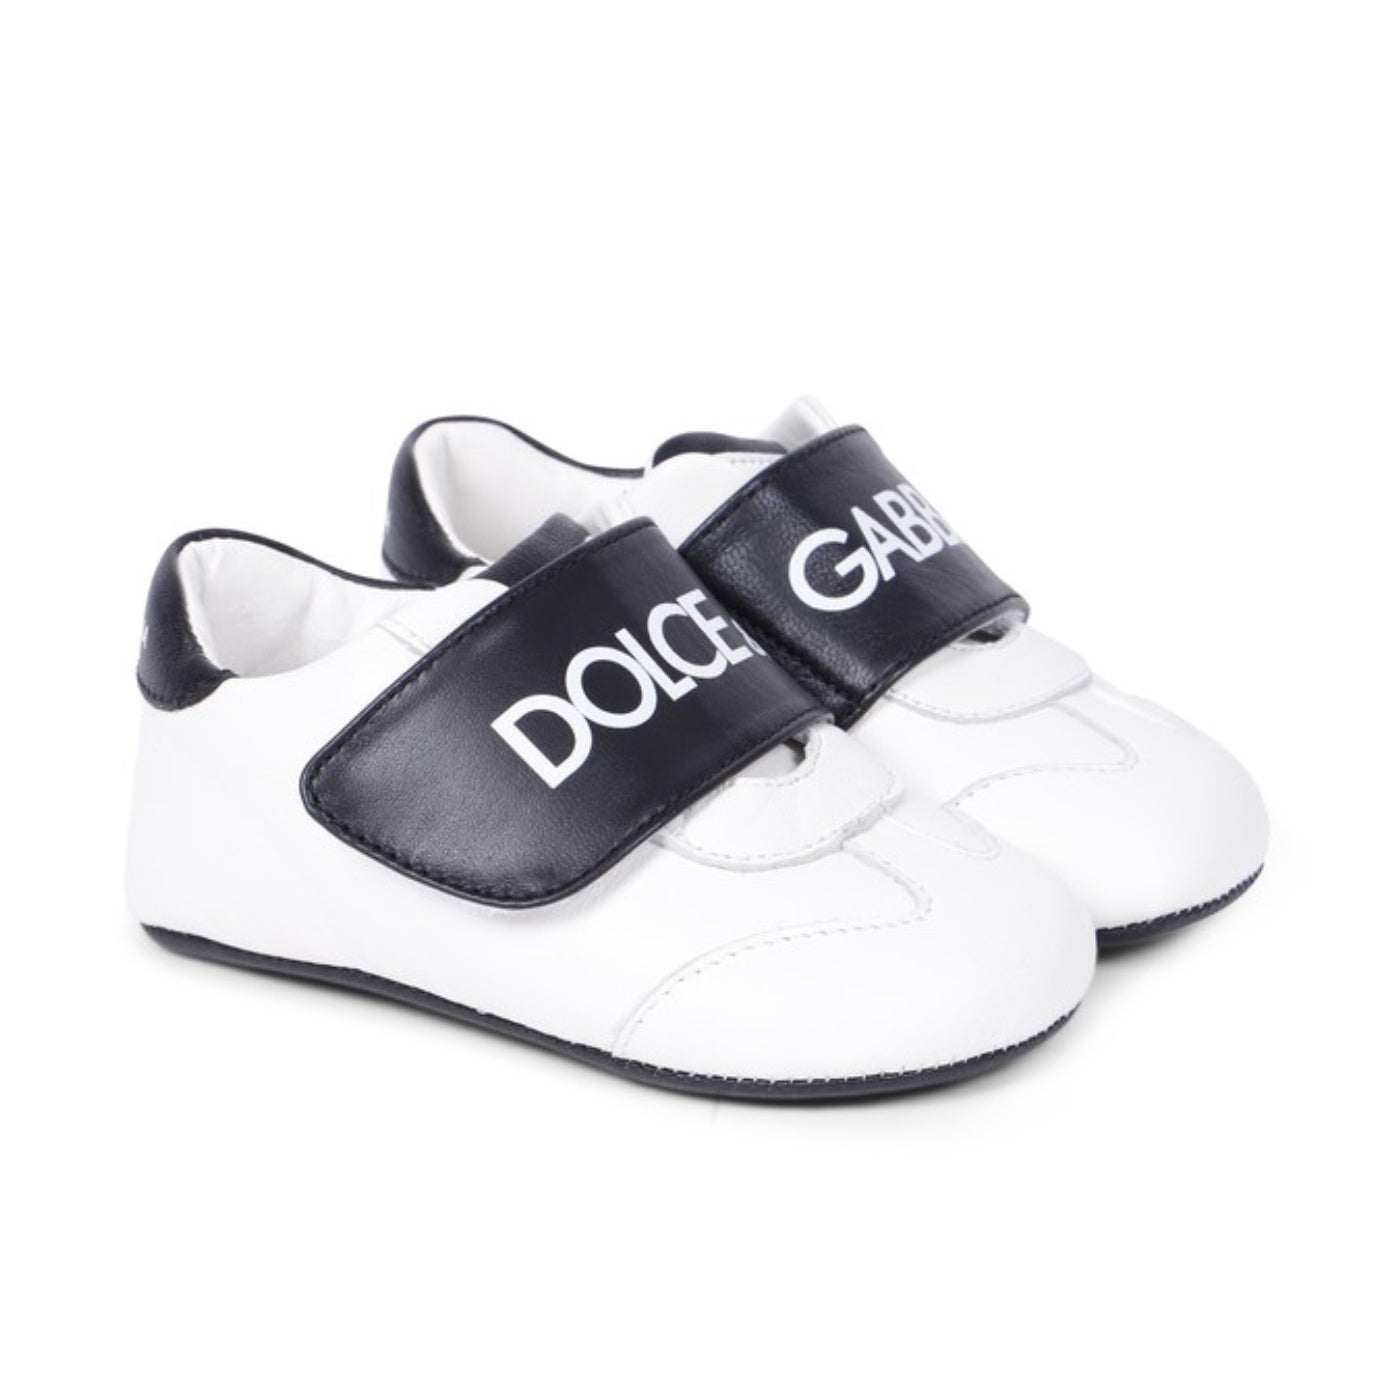 pre-walker sneakers in white and black